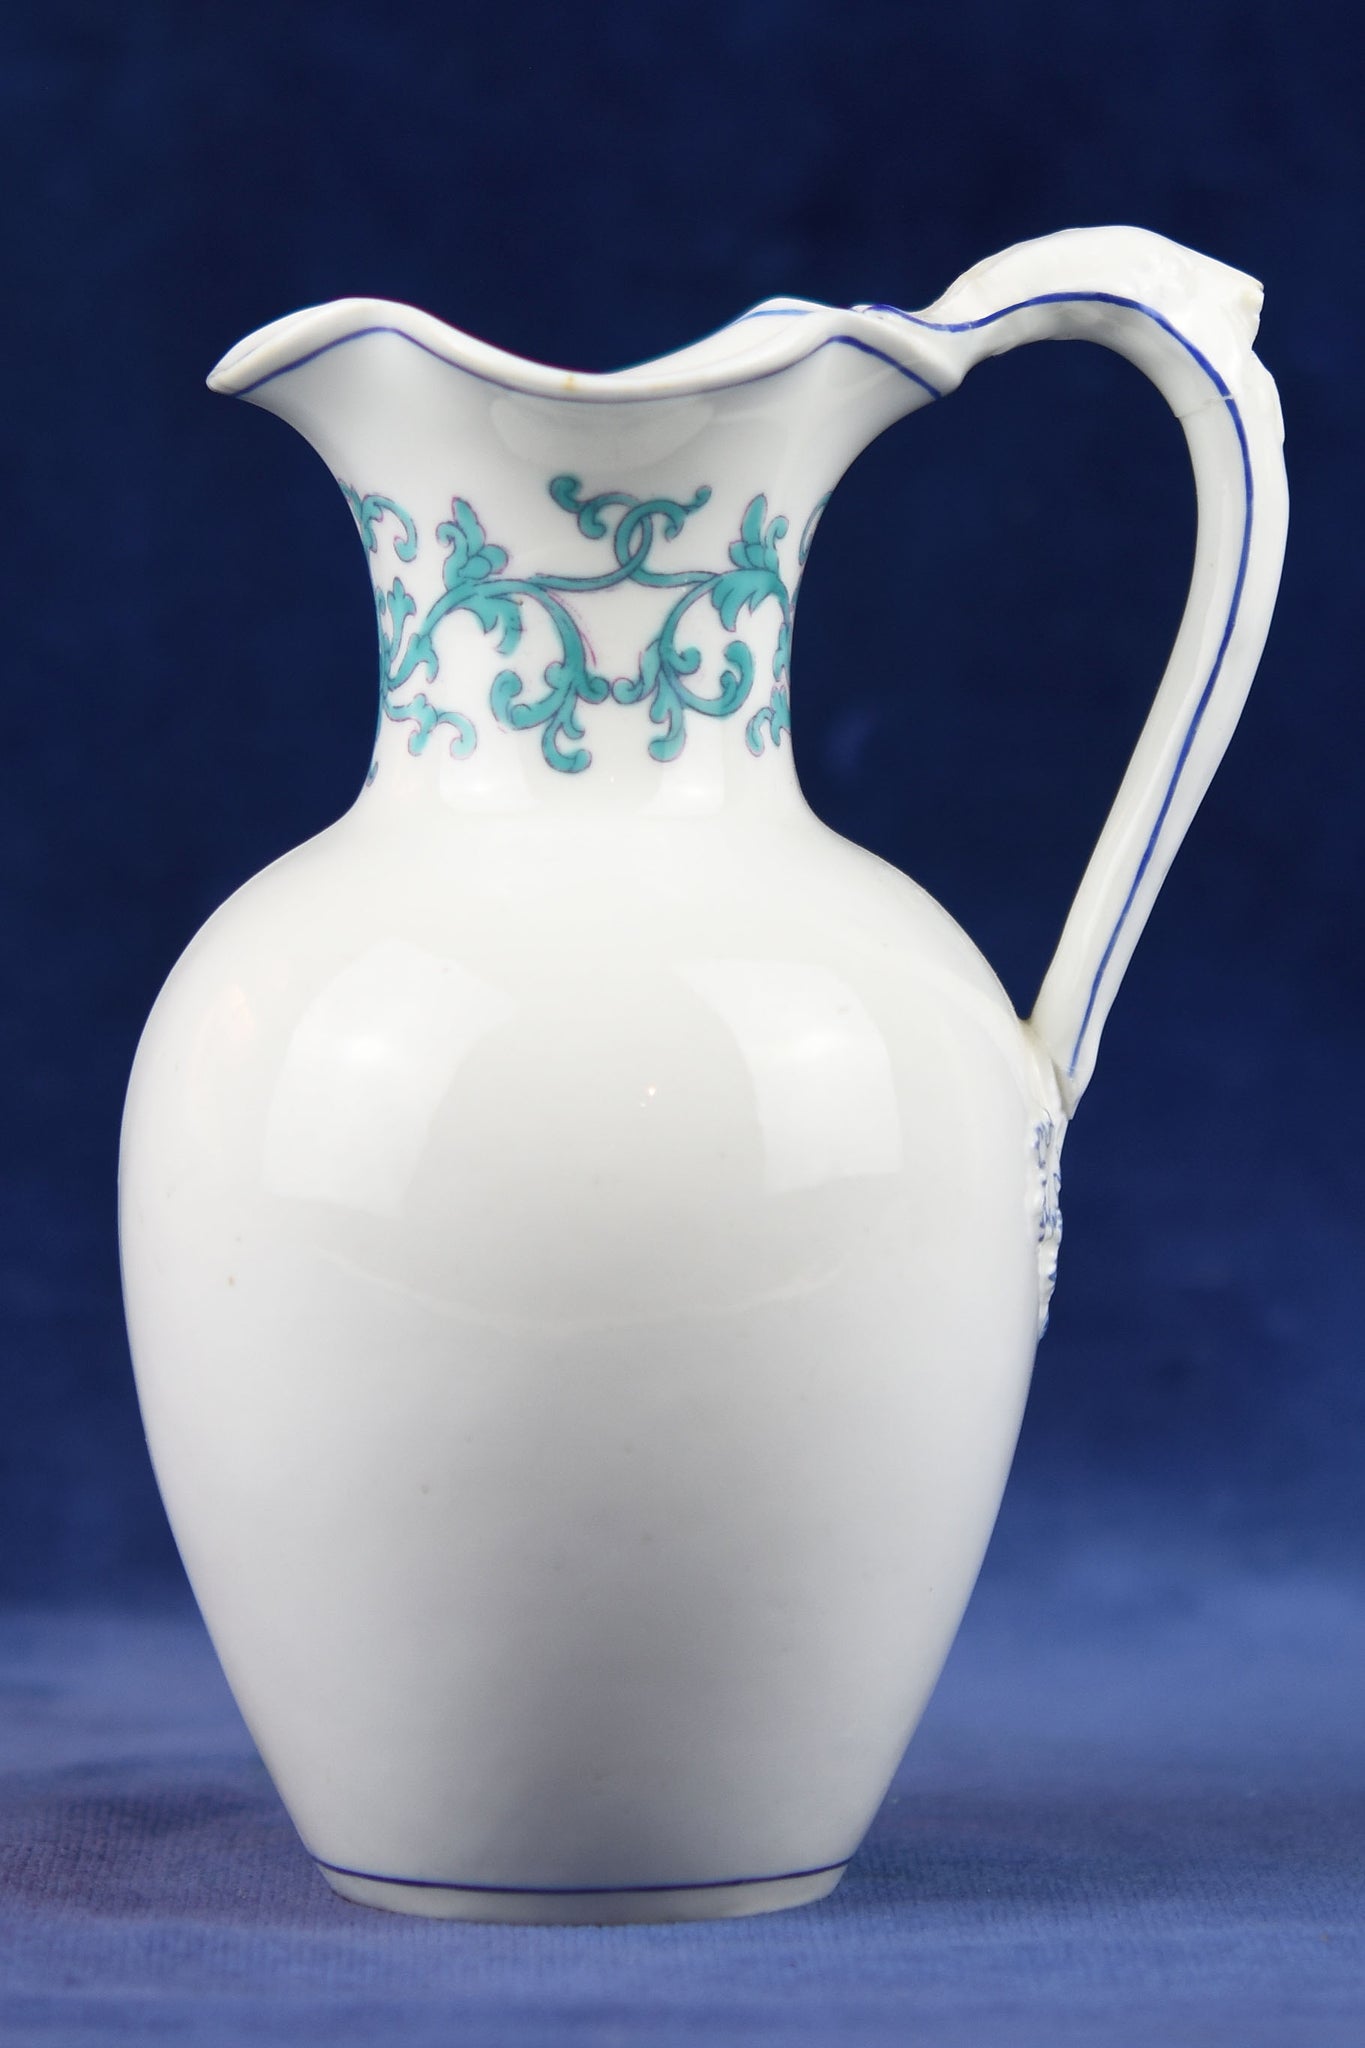 Minton Porcelain Jug Designed by Felix Summerly (Henry Cole) c.1848